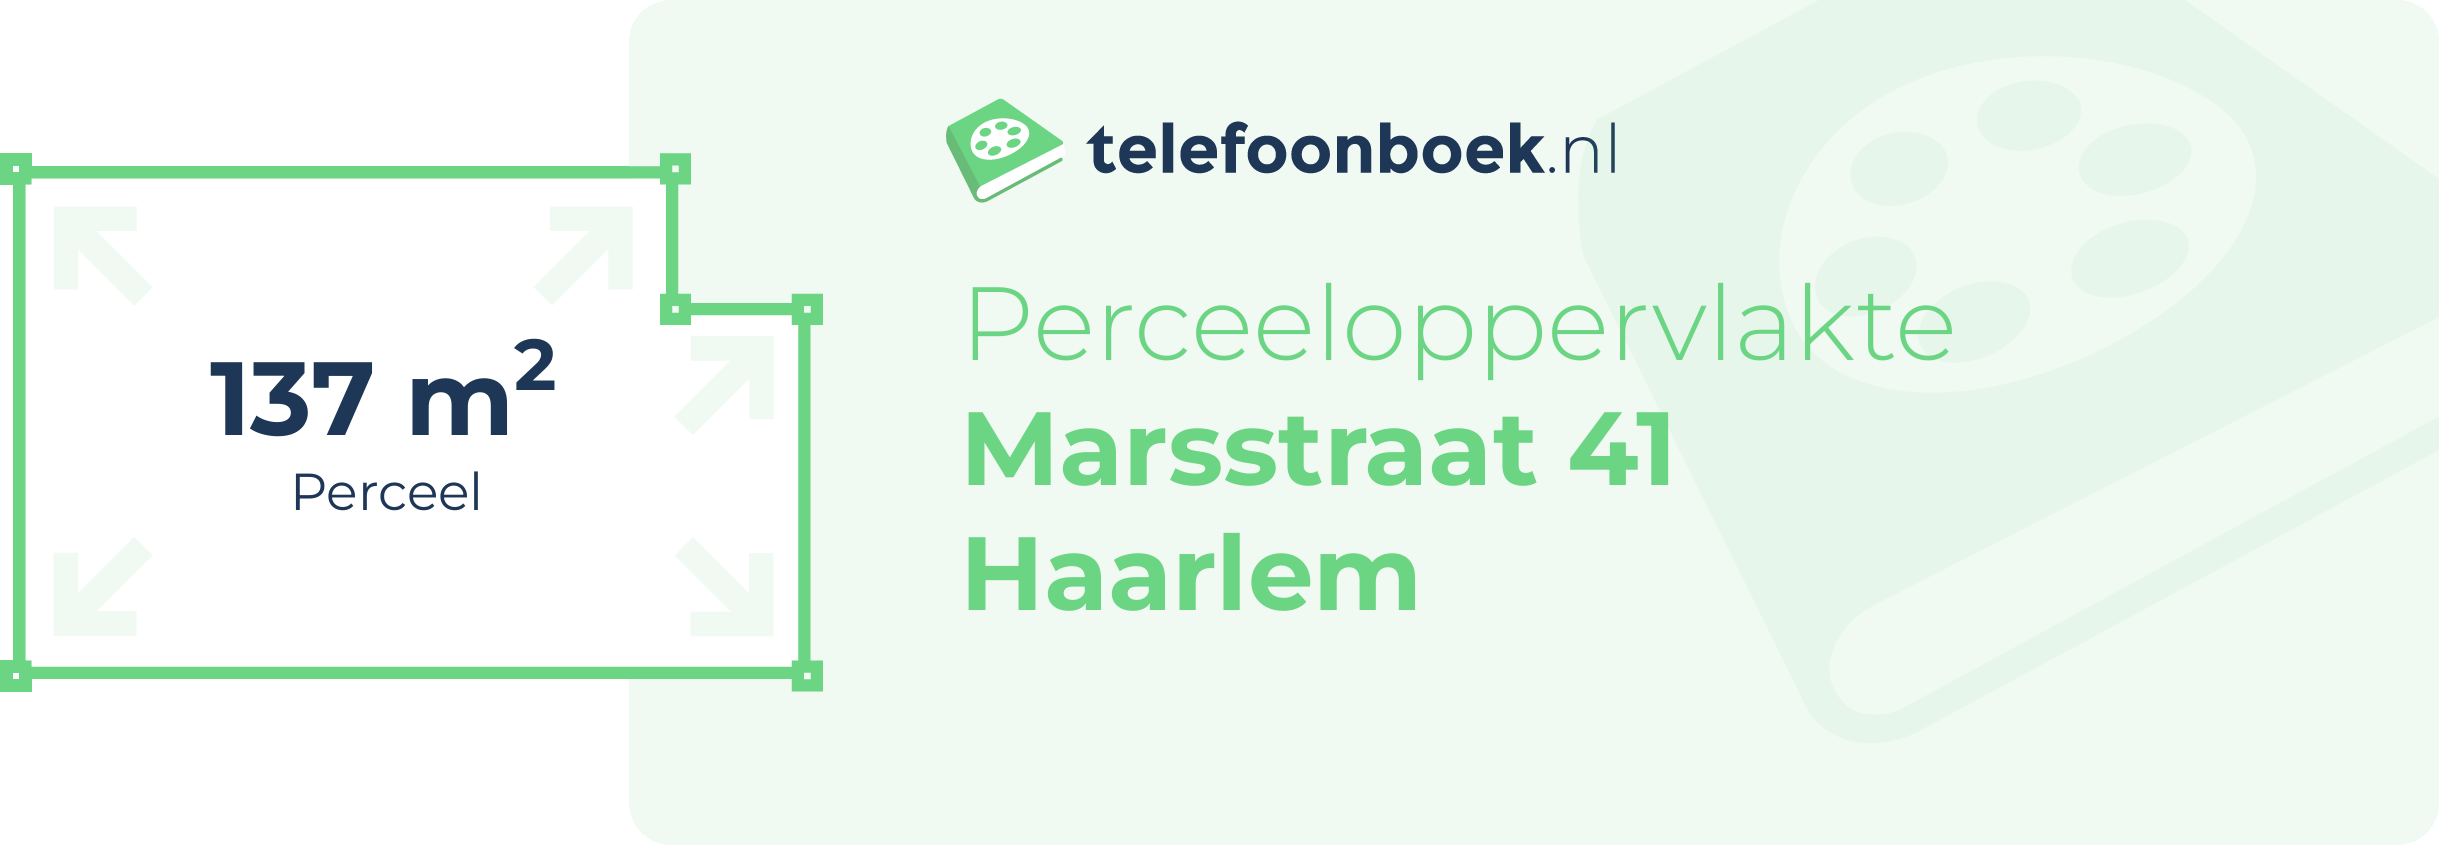 Perceeloppervlakte Marsstraat 41 Haarlem